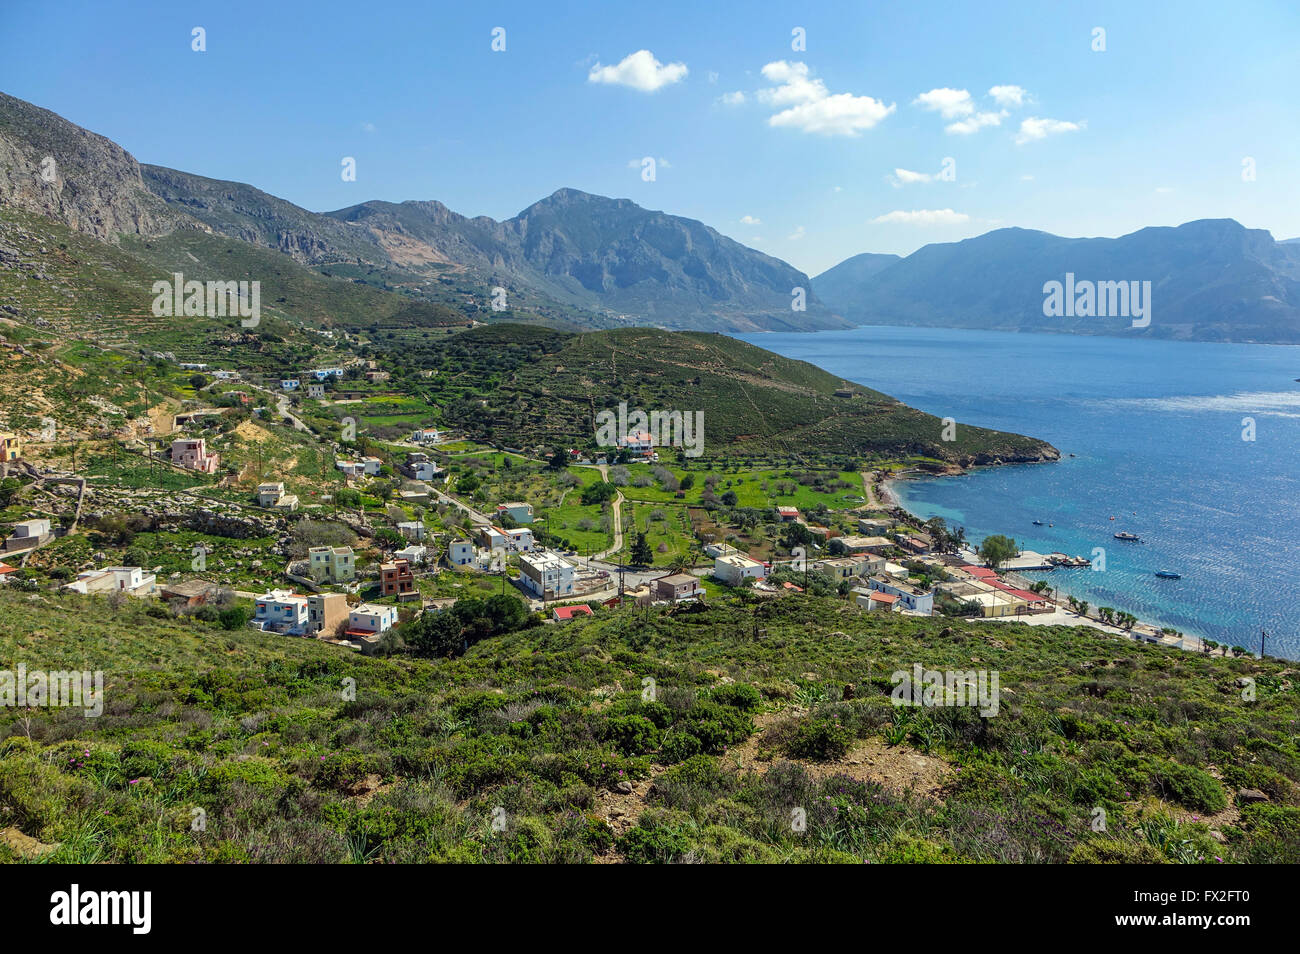 Blue sea, spring greenery and mountains at Emborios Bay Kalymnos, Greece Stock Photo